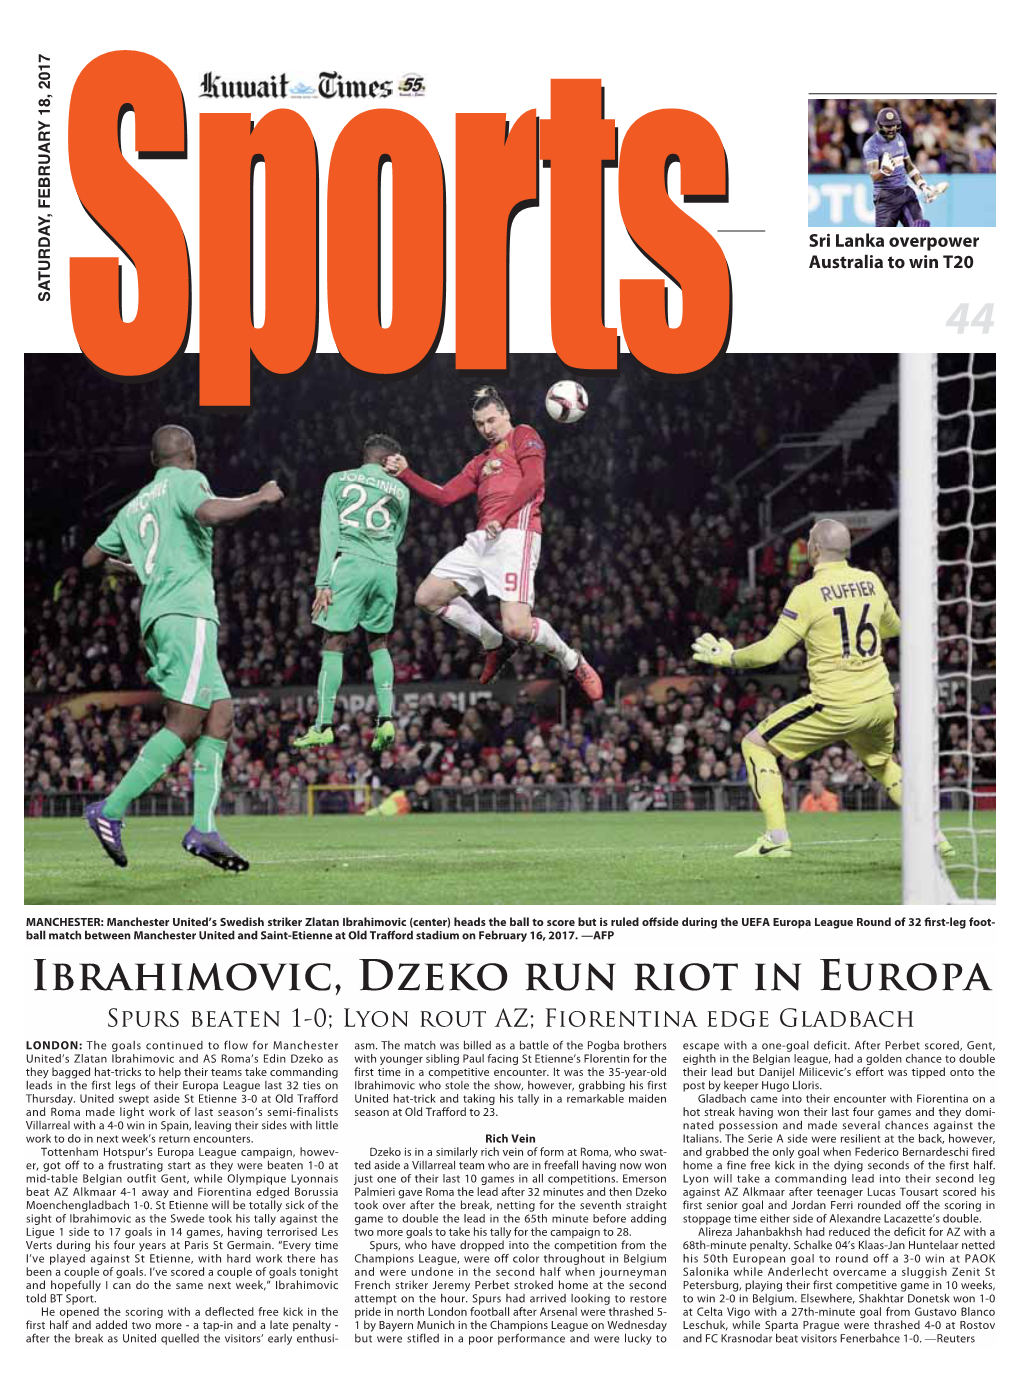 Ibrahimovic, Dzeko Run Riot in Europa Spurs Beaten 1-0; Lyon Rout AZ; Fiorentina Edge Gladbach